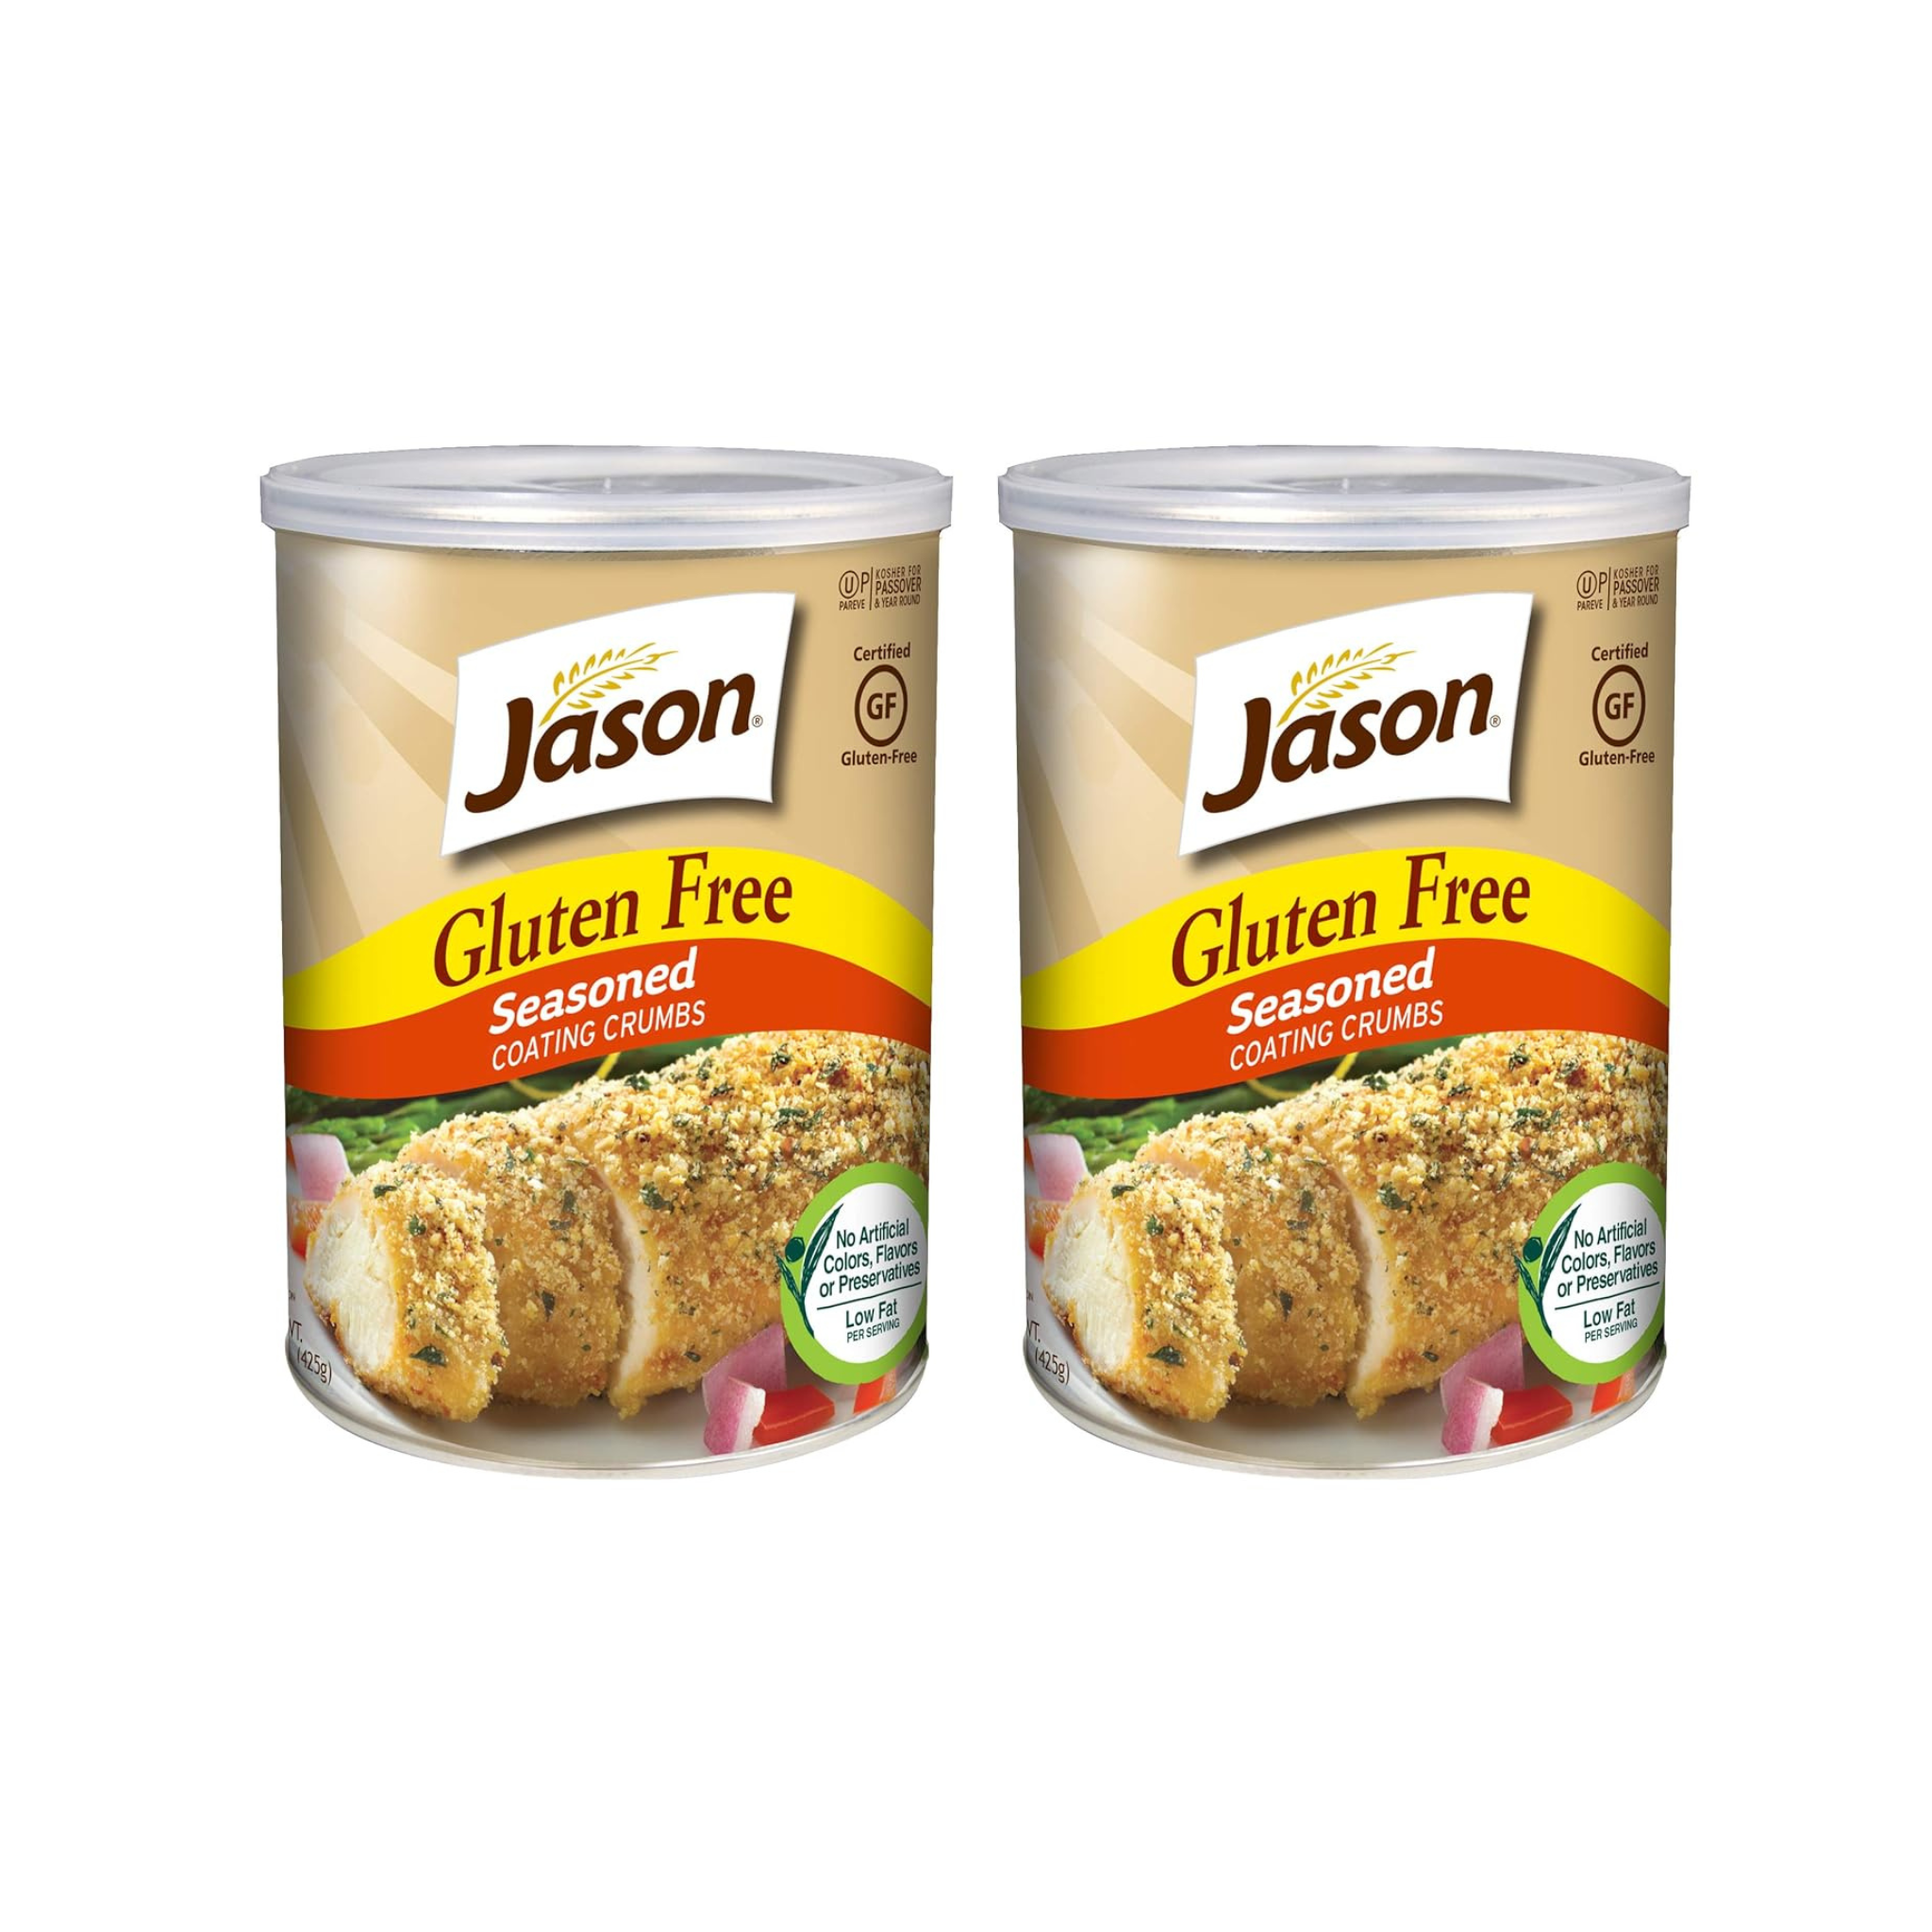 Jason Gluten Free Kosher For Passover Coating Crumbs, 2 Pack